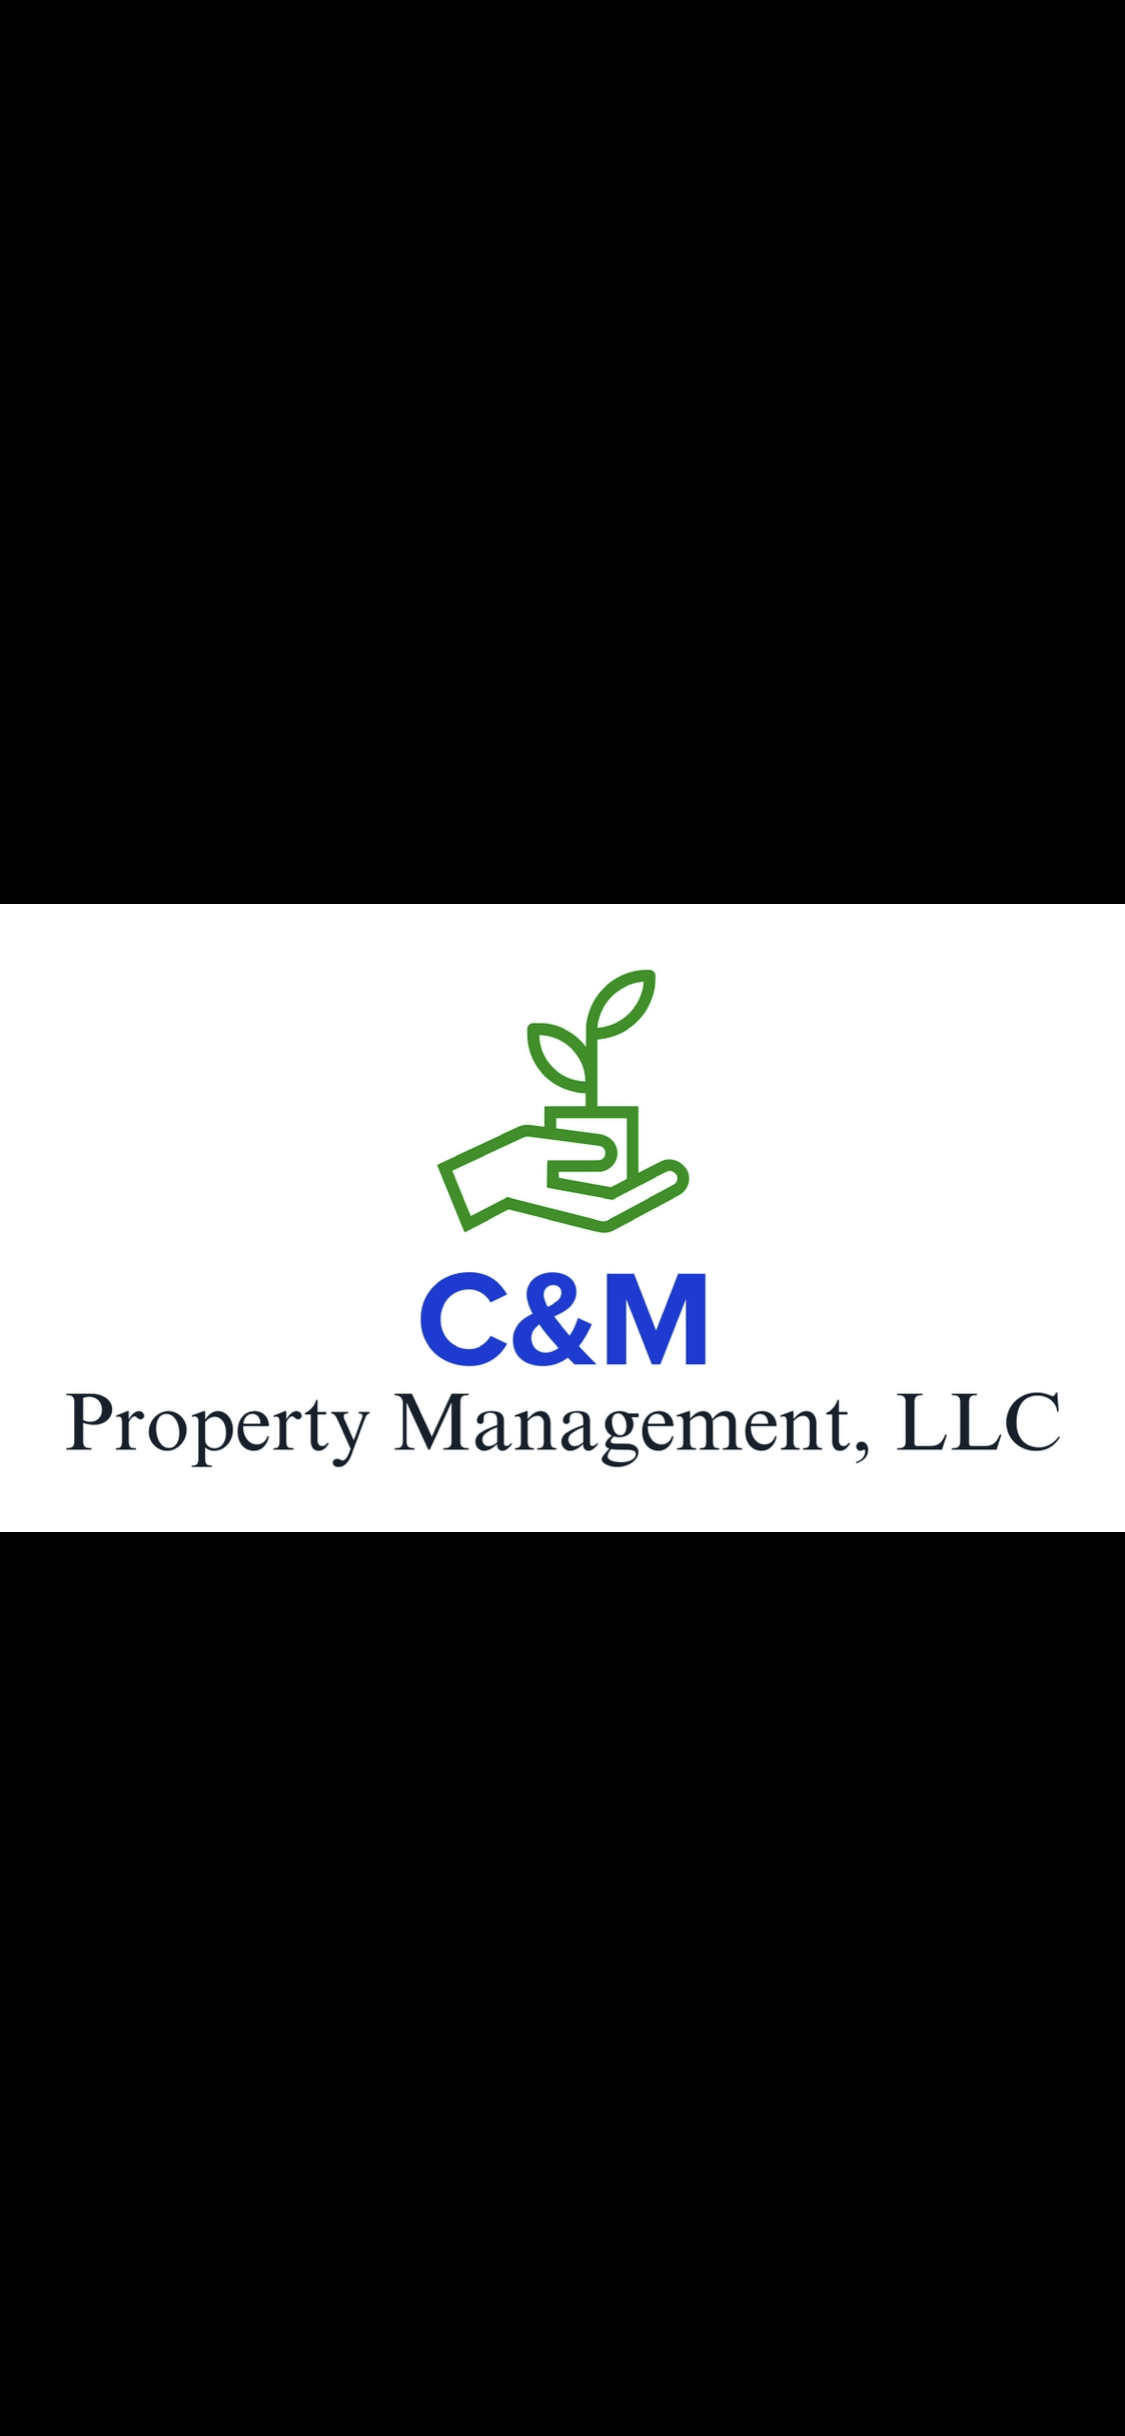 C&M Property Management, LLC Logo